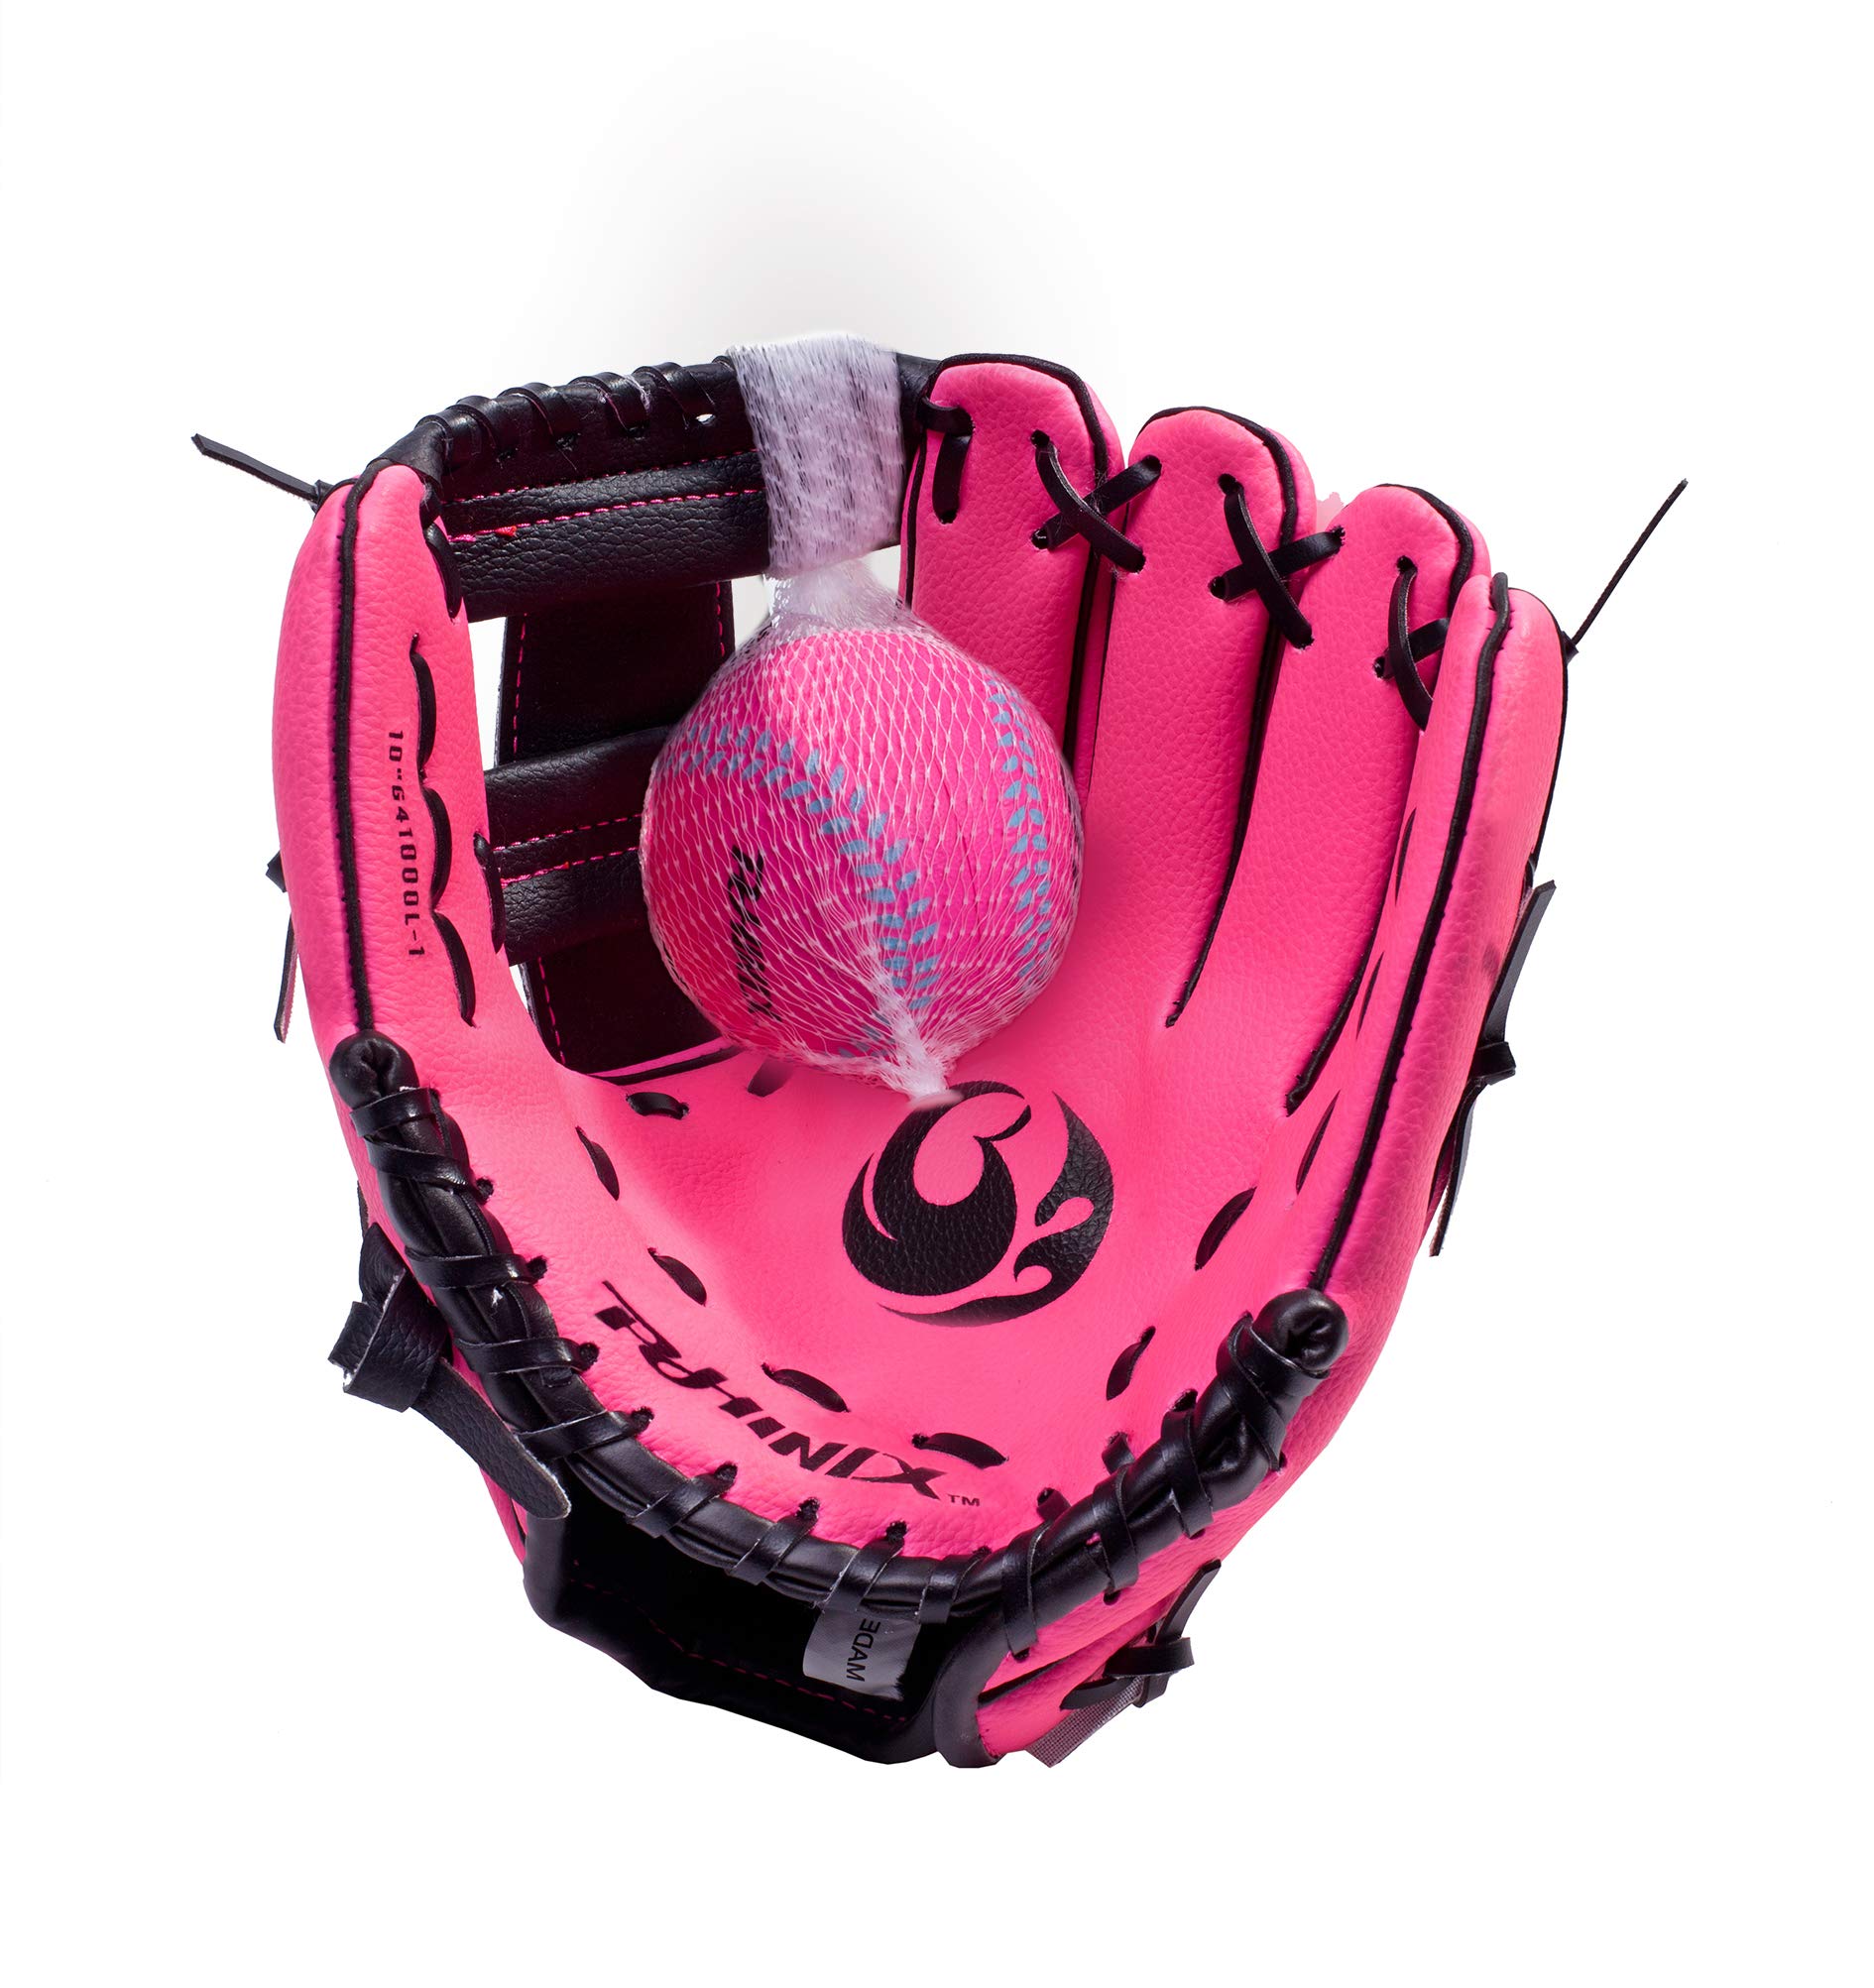 PHINIX 8 12 Baseball glove Tee Ball Mitts and Foam Ball for Kids Beginner Play Training Right Hand Throw Pink